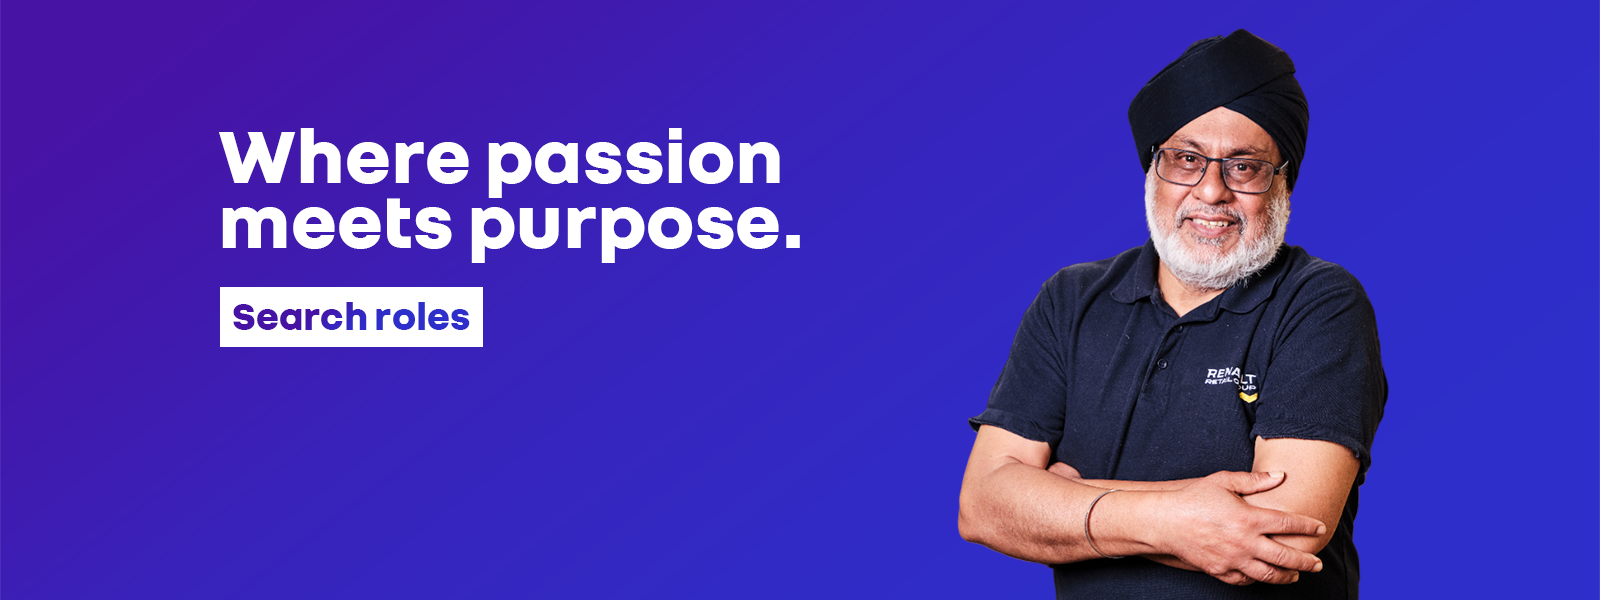 Where passion meets purpose